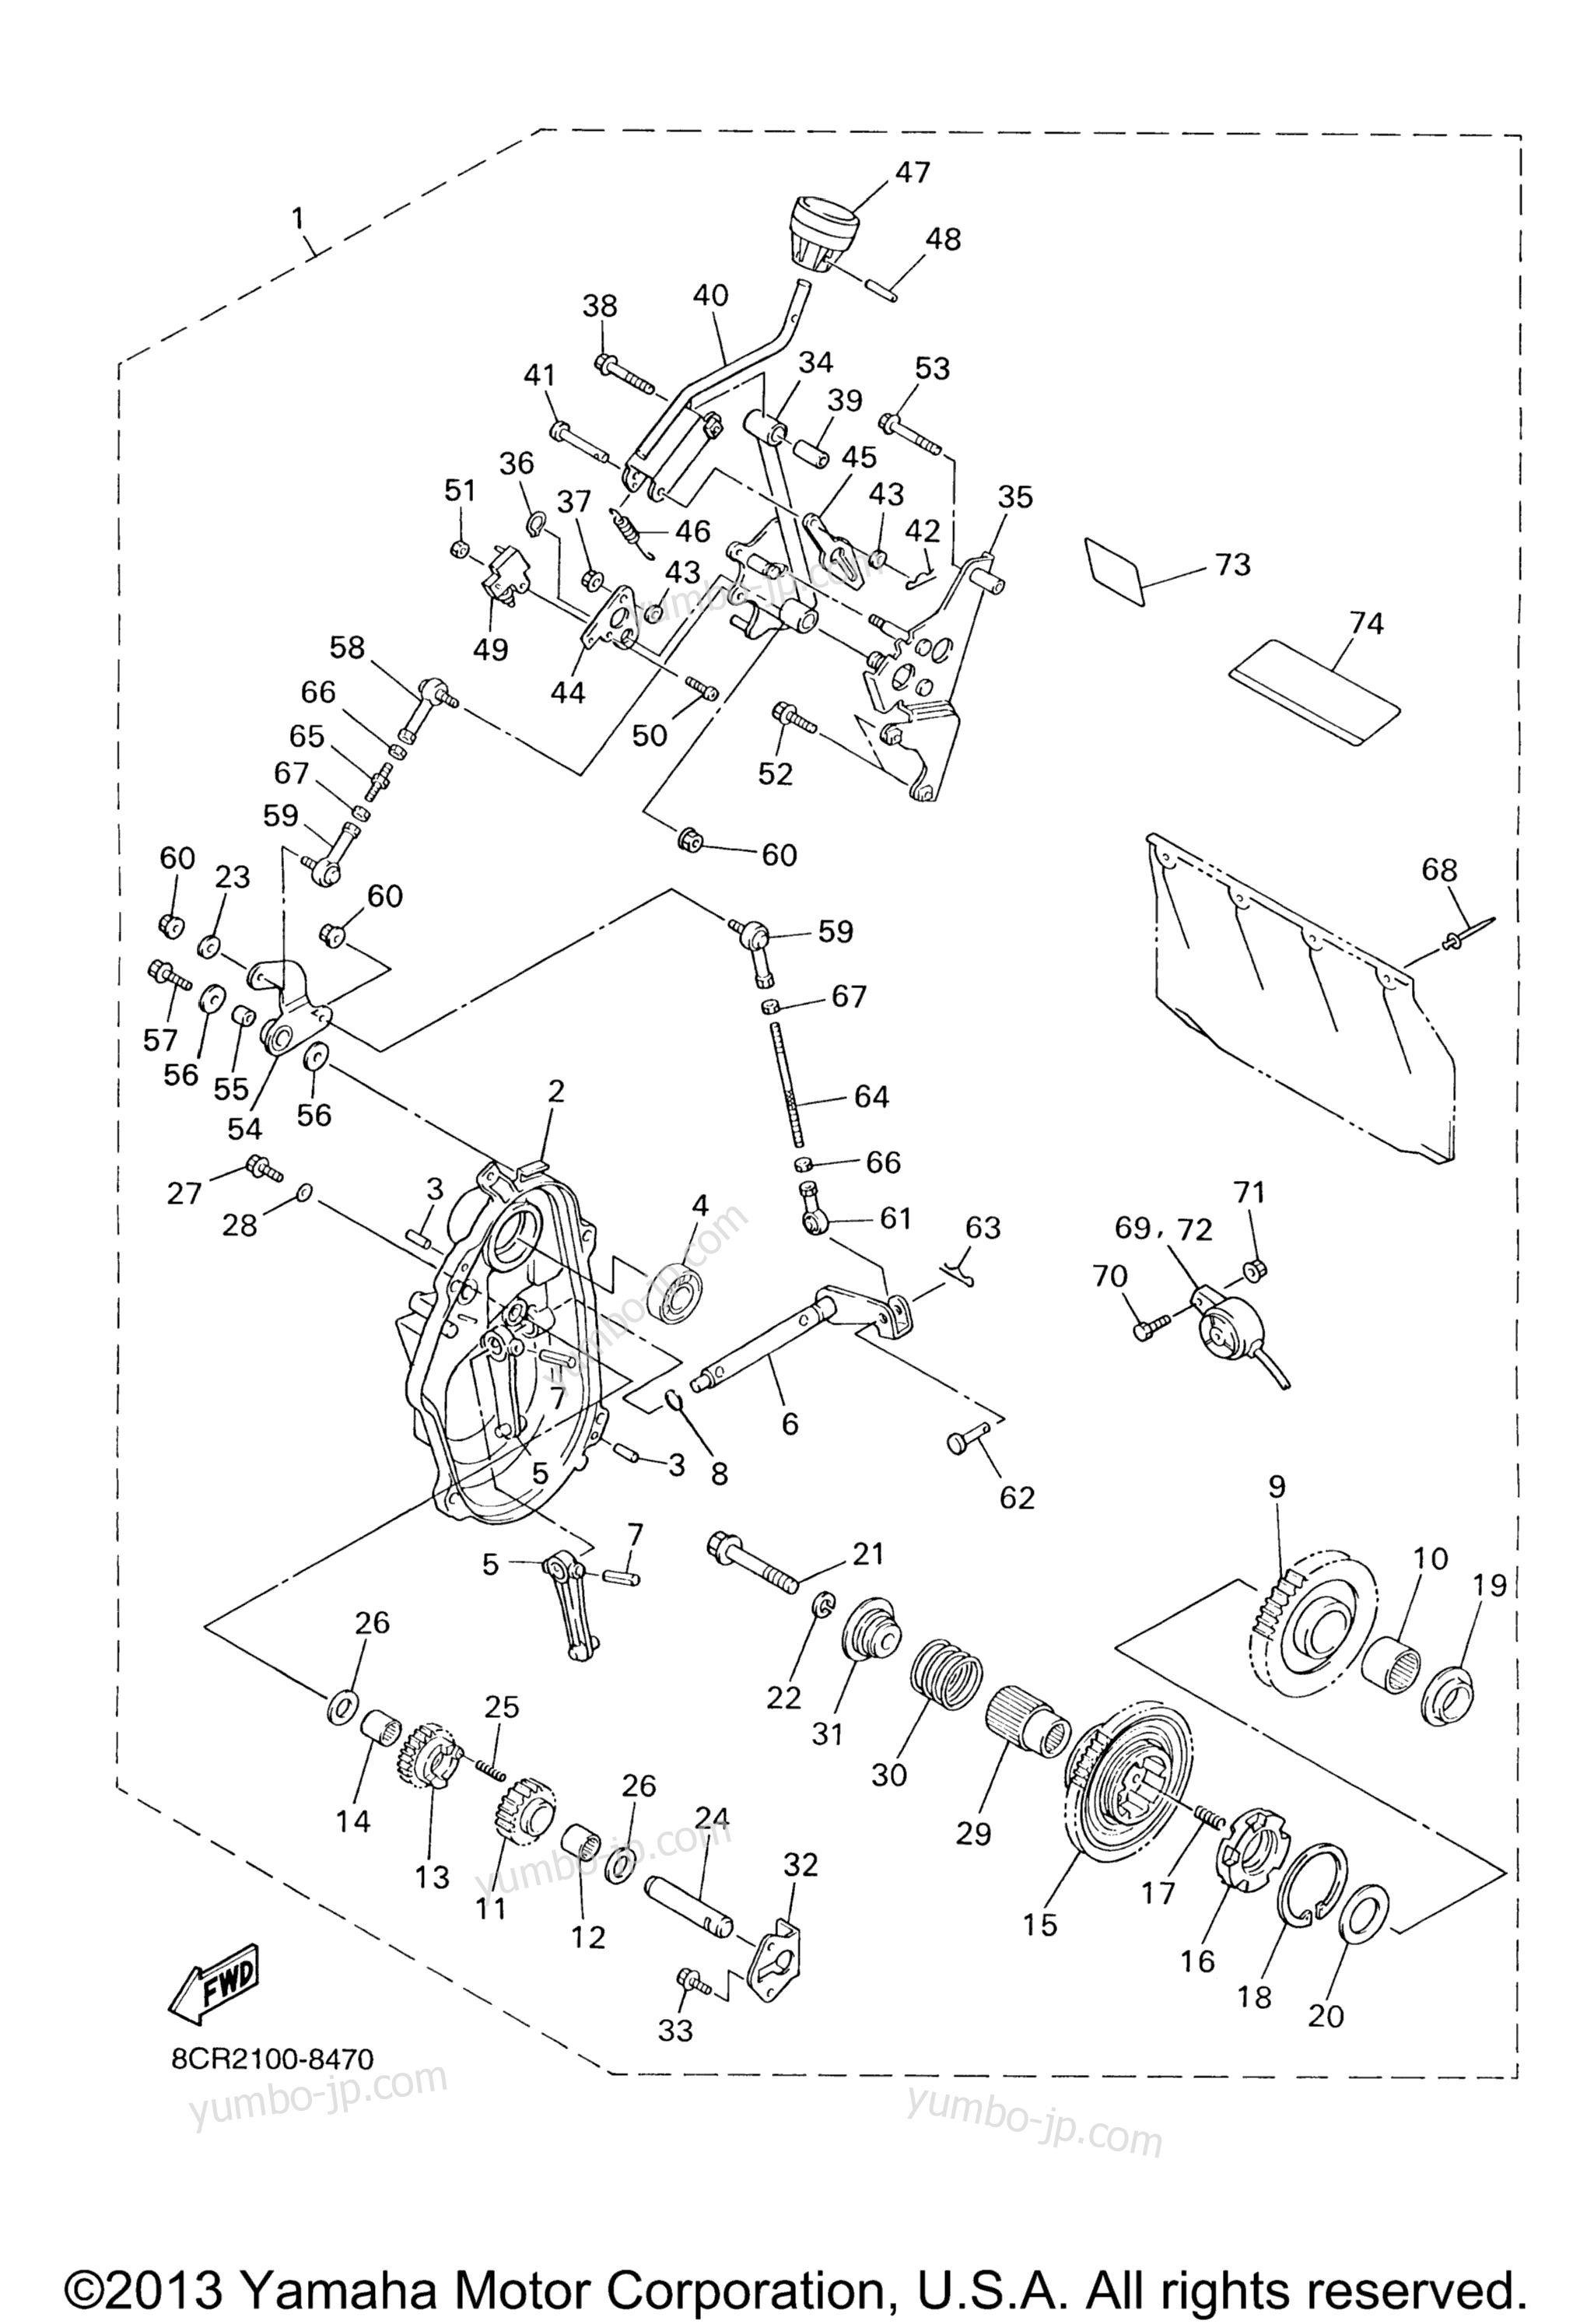 Alternate Reverse Gear Kit for snowmobiles YAMAHA SX500R (SX500F) 2001 year